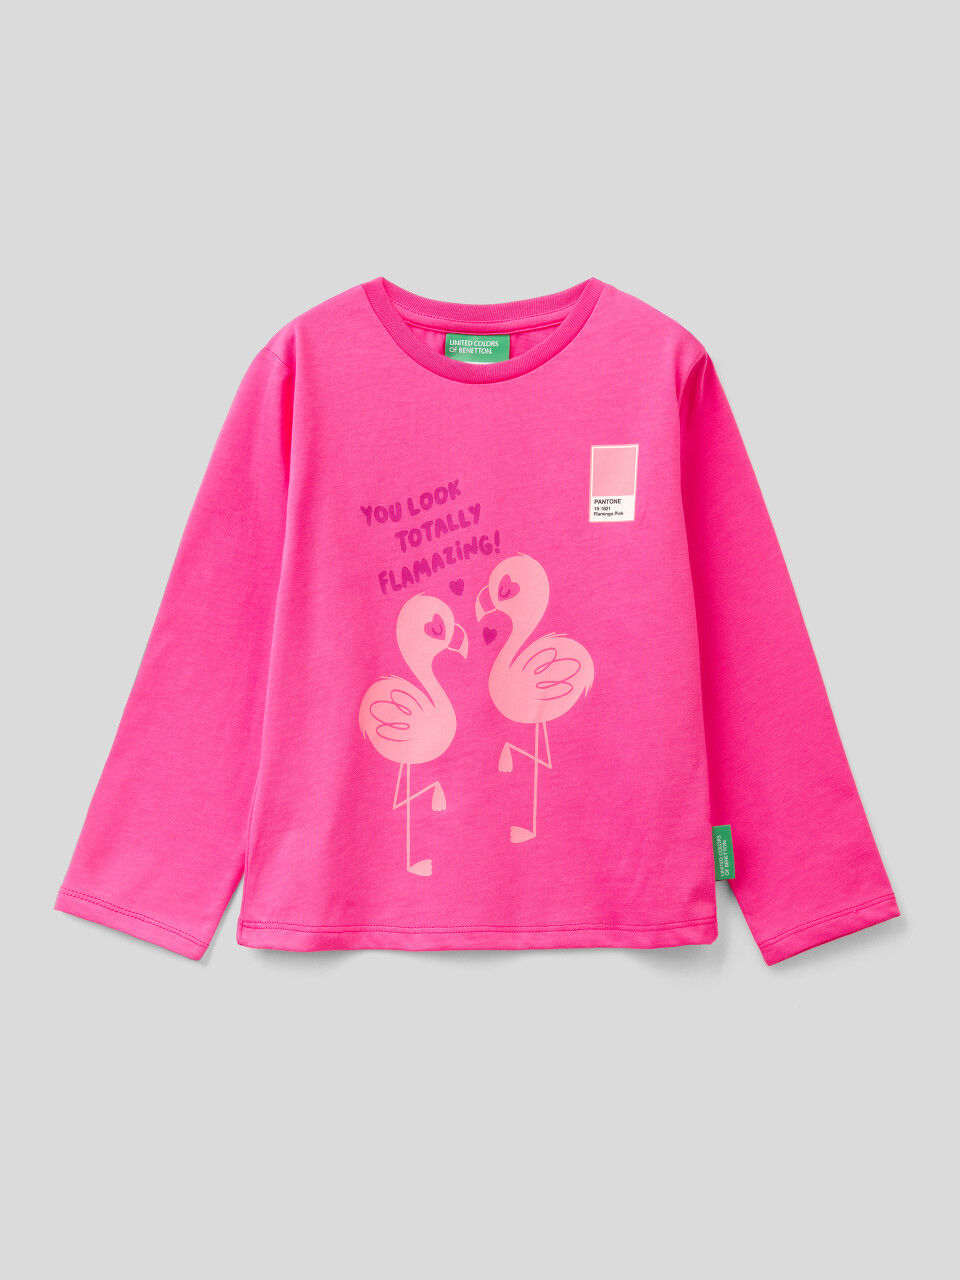 KIDS FASHION Shirts & T-shirts Elegant Pink 18-24M discount 94% United colors of benetton T-shirt 